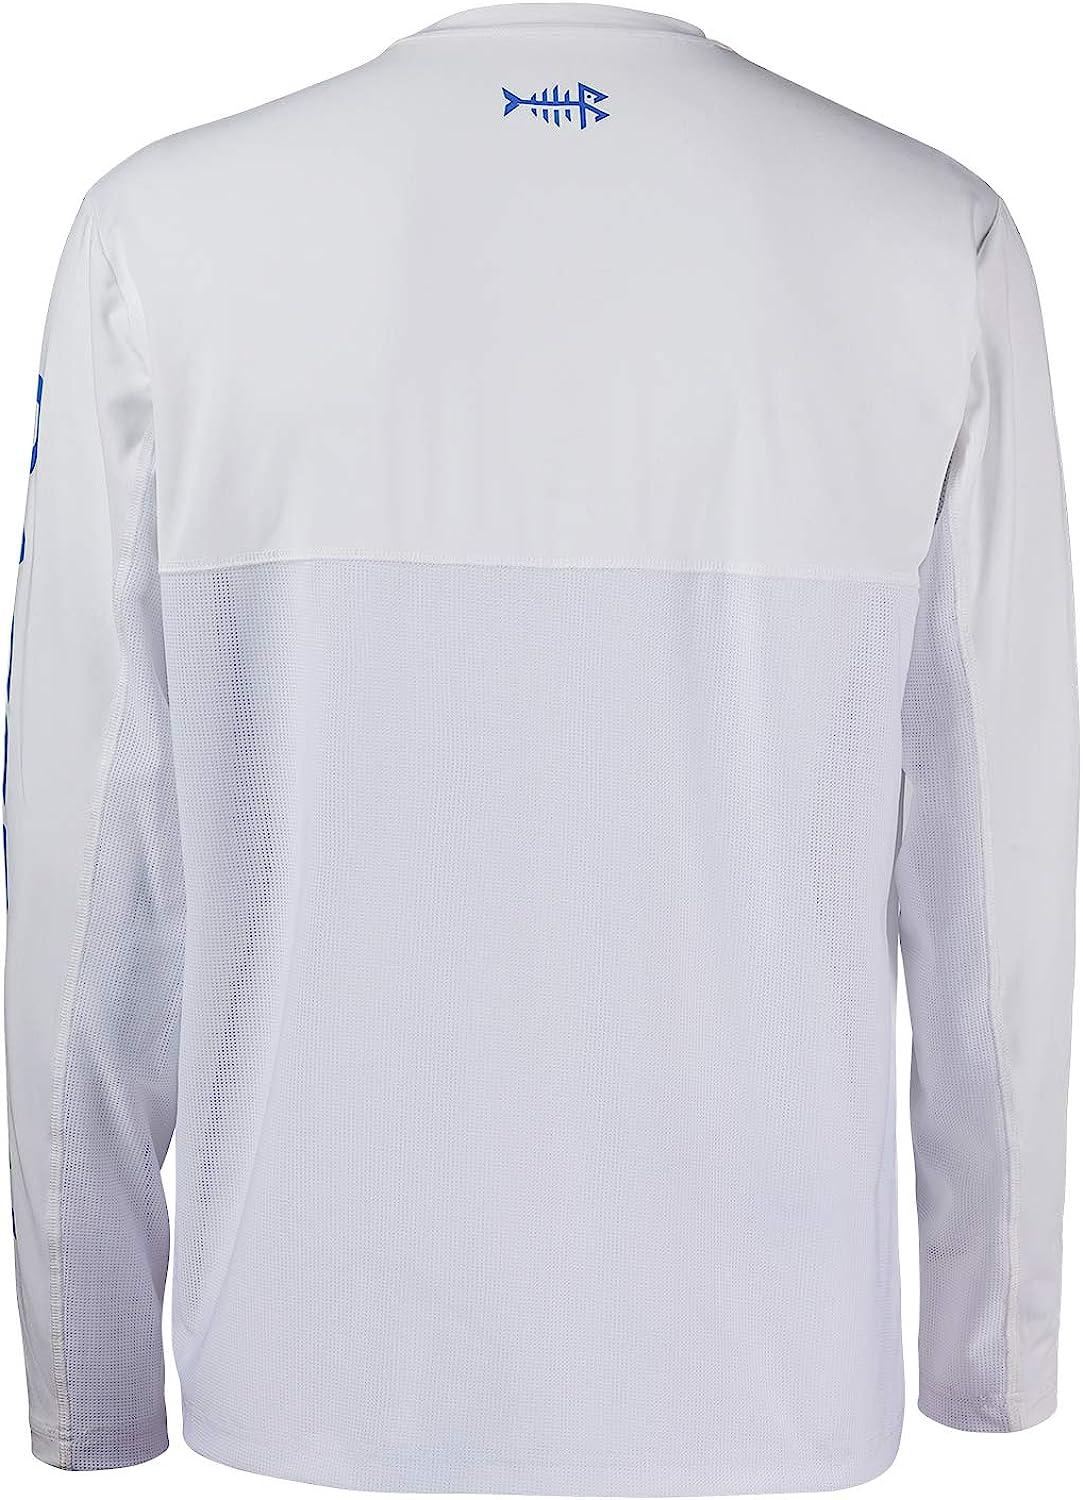 BASSDASH Fishing T Shirts for Men UV Sun Protection UPF 50+ Long Sleeve Tee  T-Shirt White/Vivid Blue Logo Large